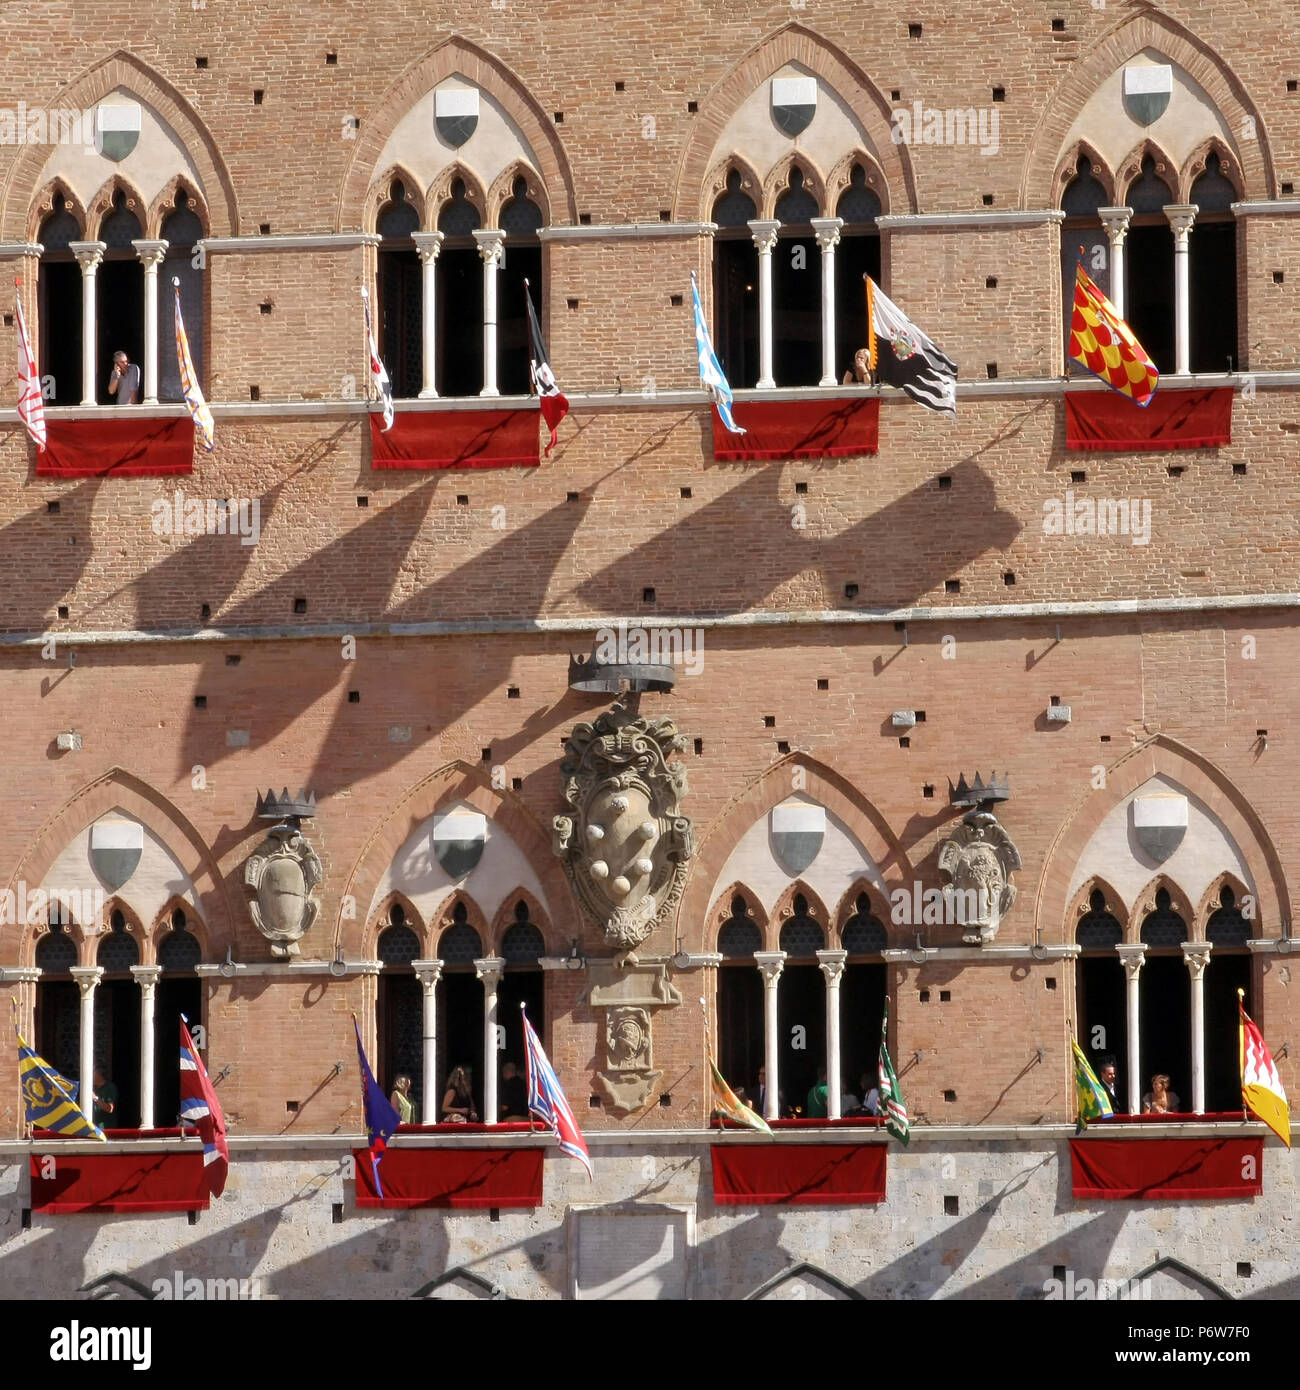 SIENA, Italien - 16. AUGUST 2008: Palio di Siena, Toskana, Italien. Bunten historischen ungesatteltes Pferd. In der wunderschönen, historischen Piazza del Stockfoto